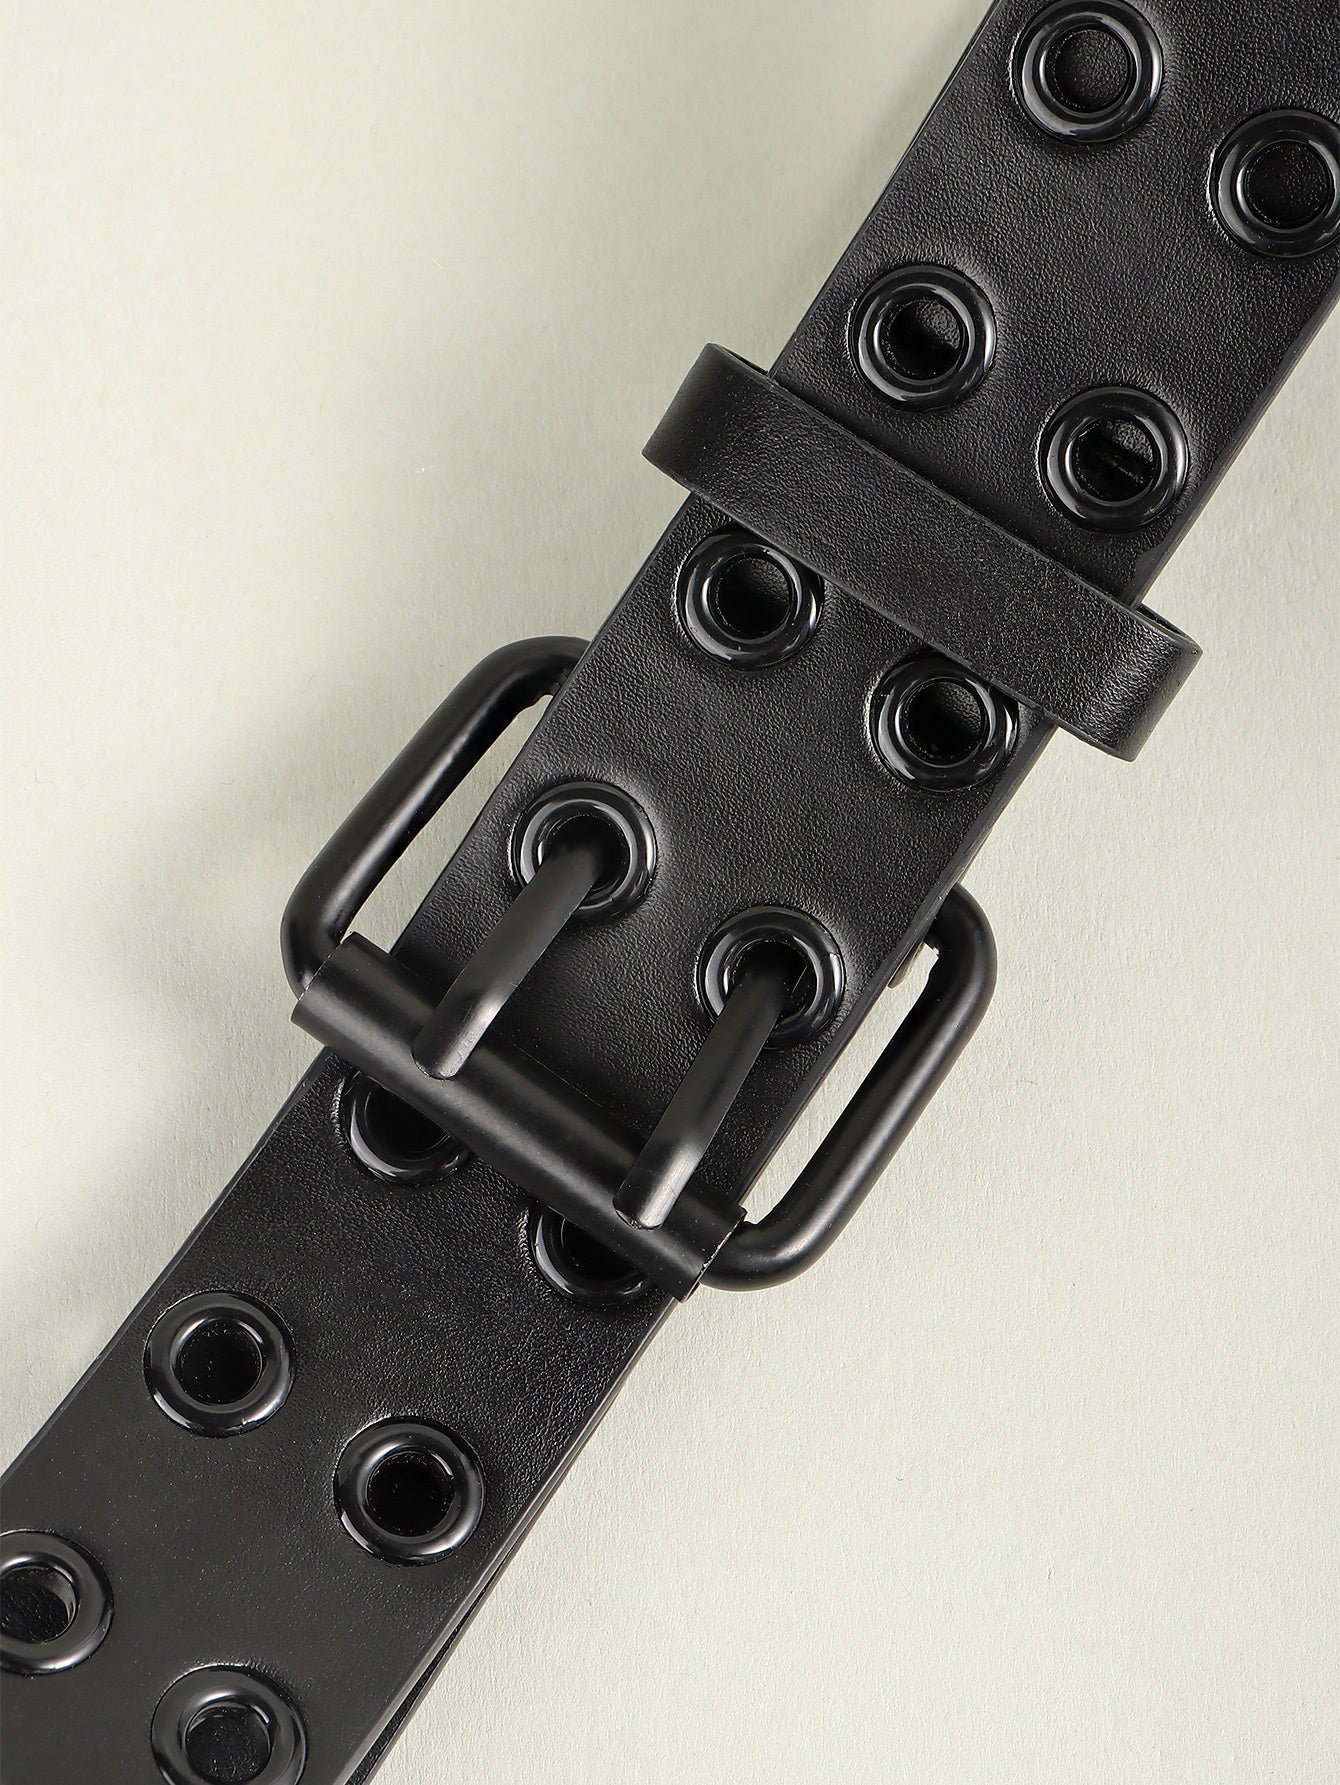 Dark Slate Gray Grommet PU Leather Belt